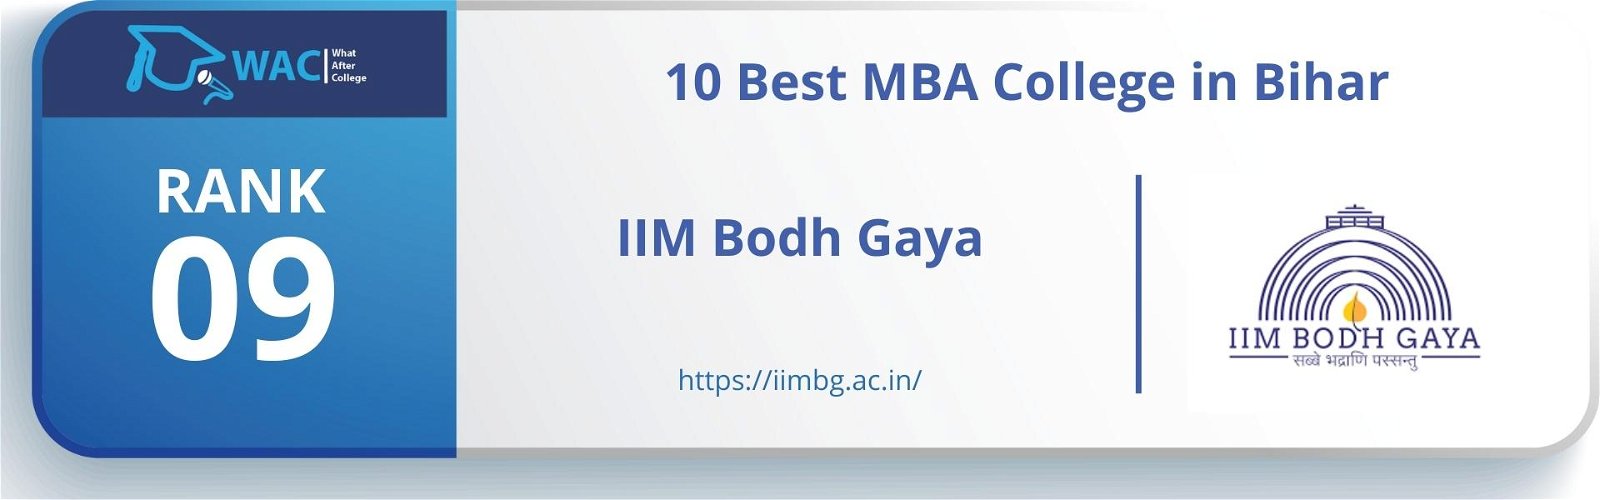 MBA College in Bihar